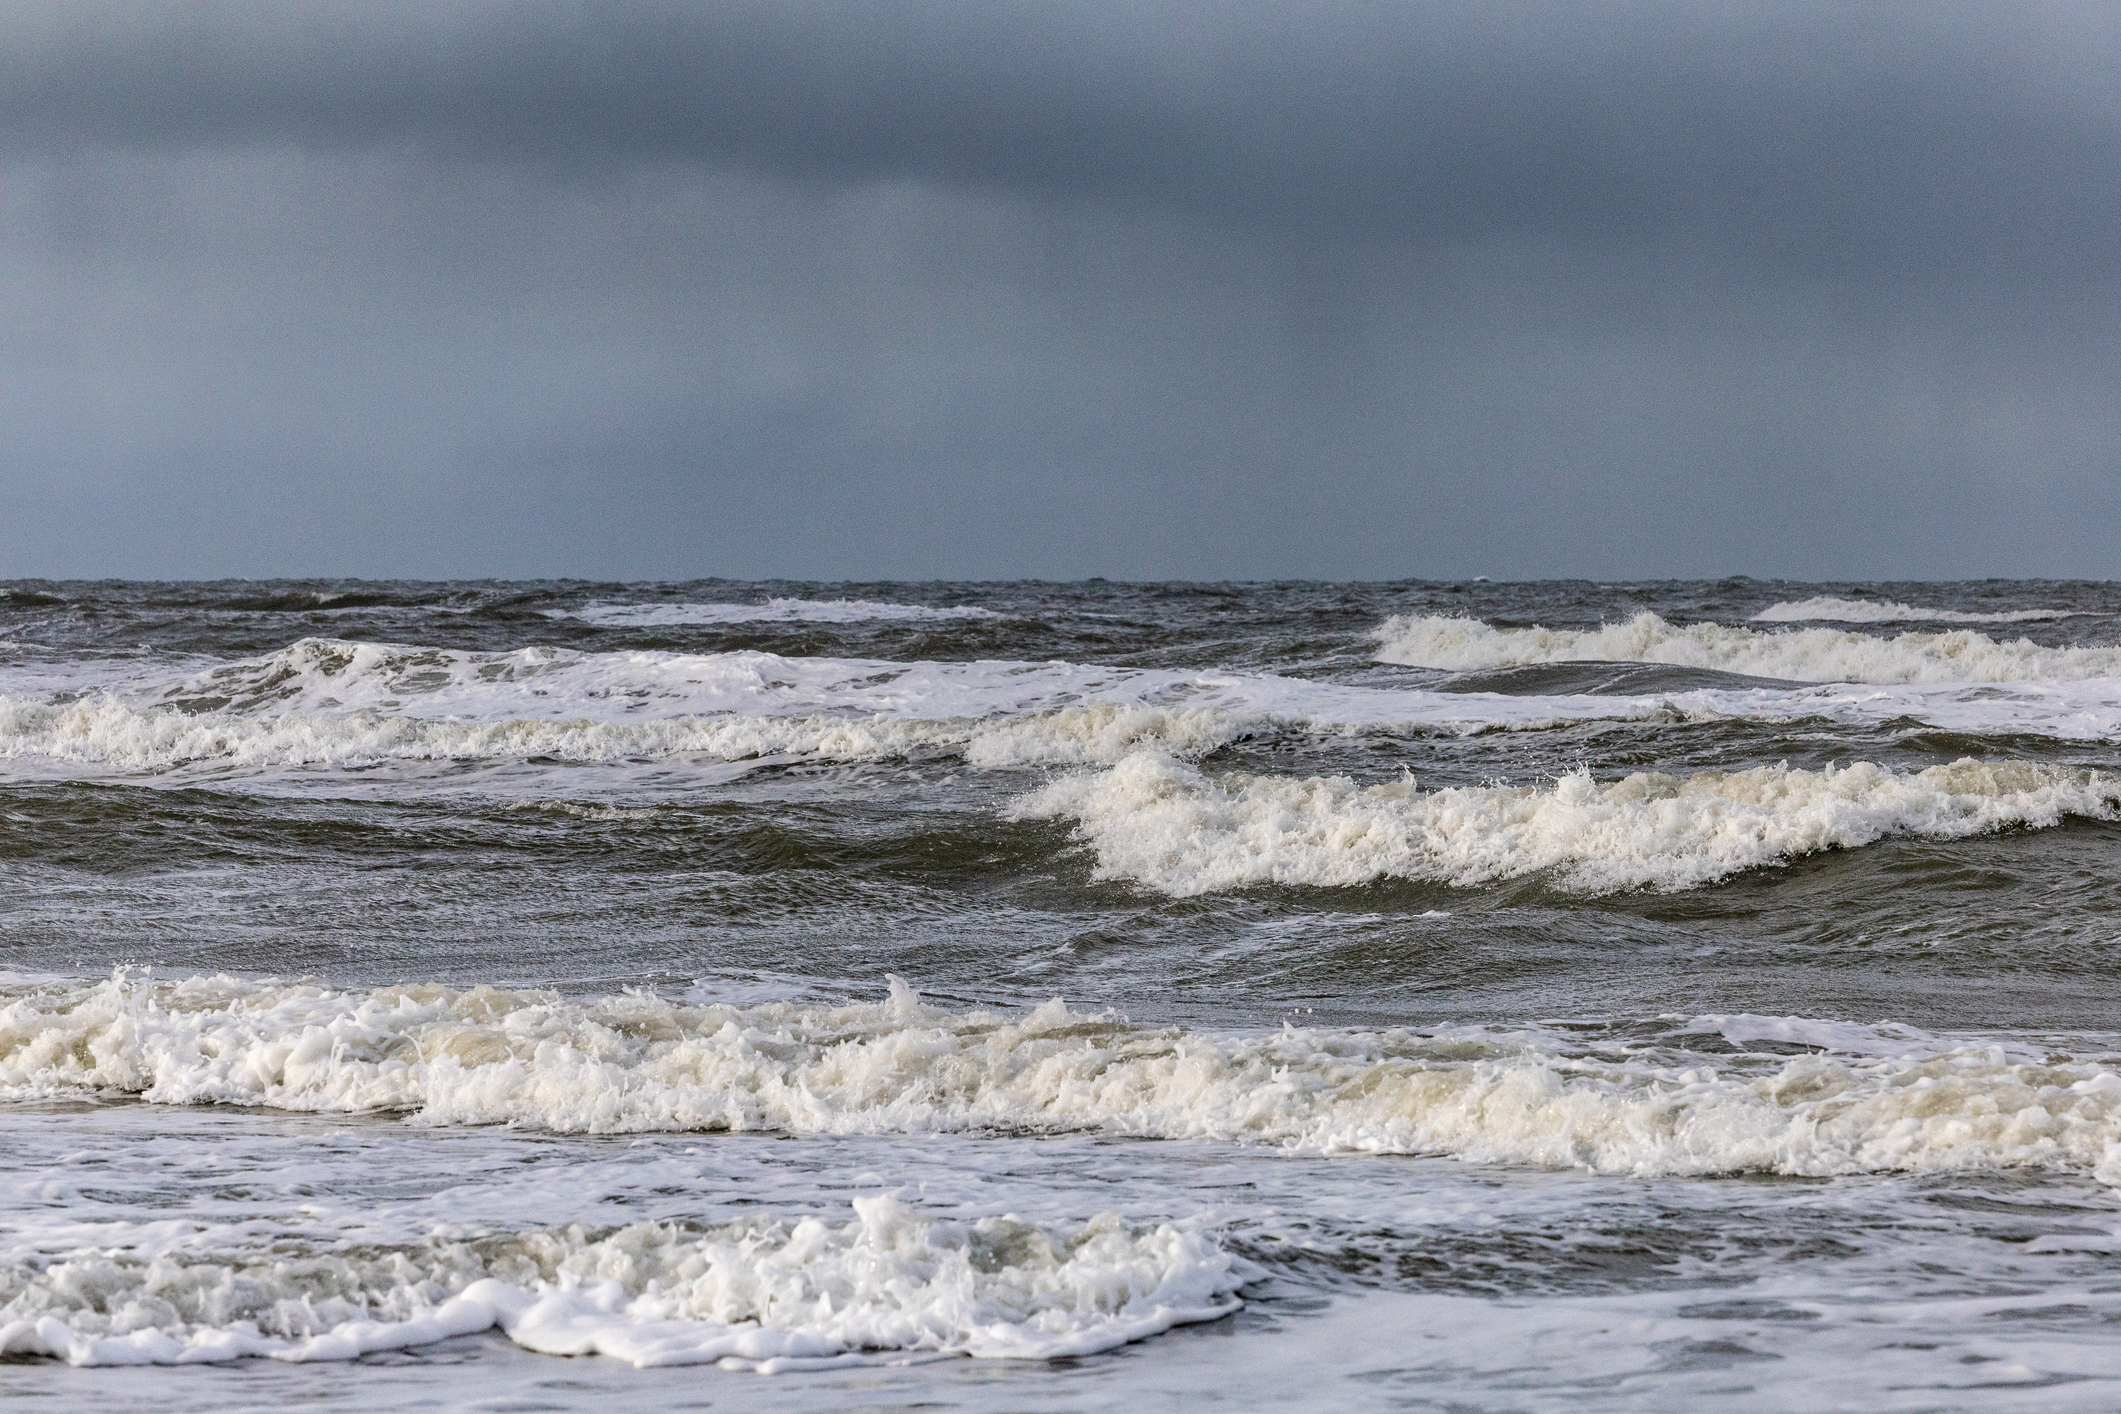 Stormy sea with choppy waves under an overcast sky